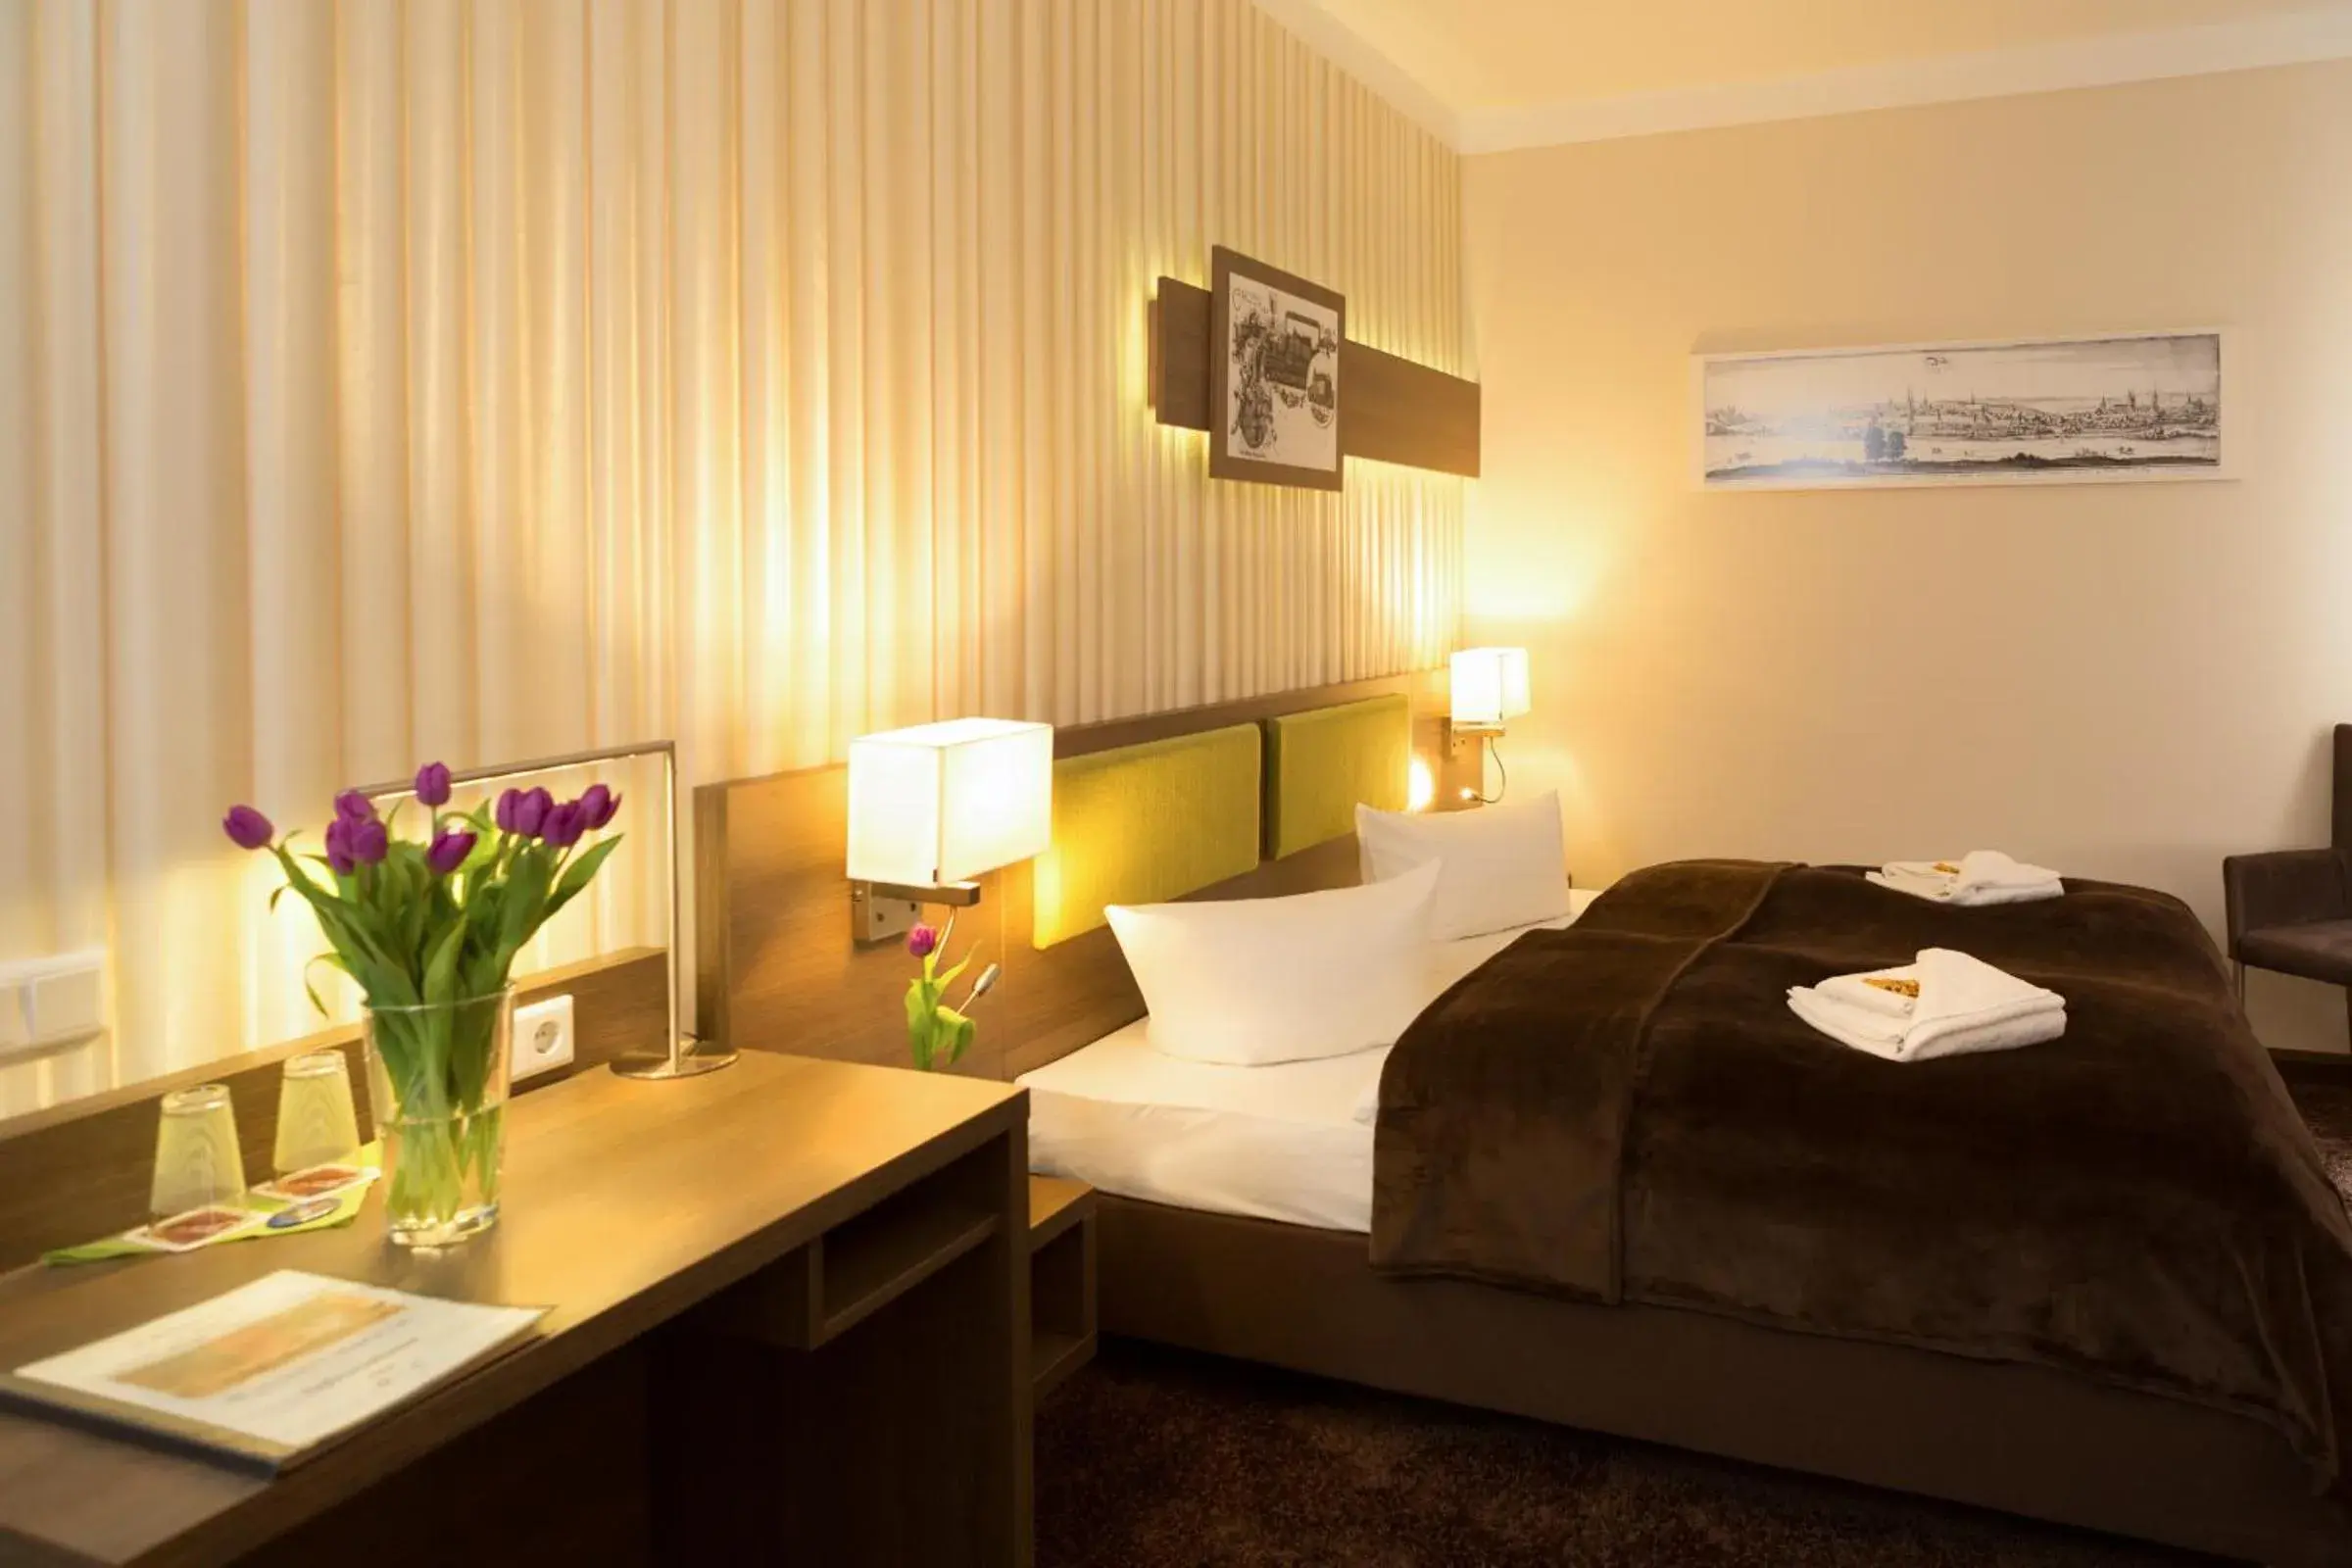 Deluxe Double Room with Bath in Hotel Weisse Elster